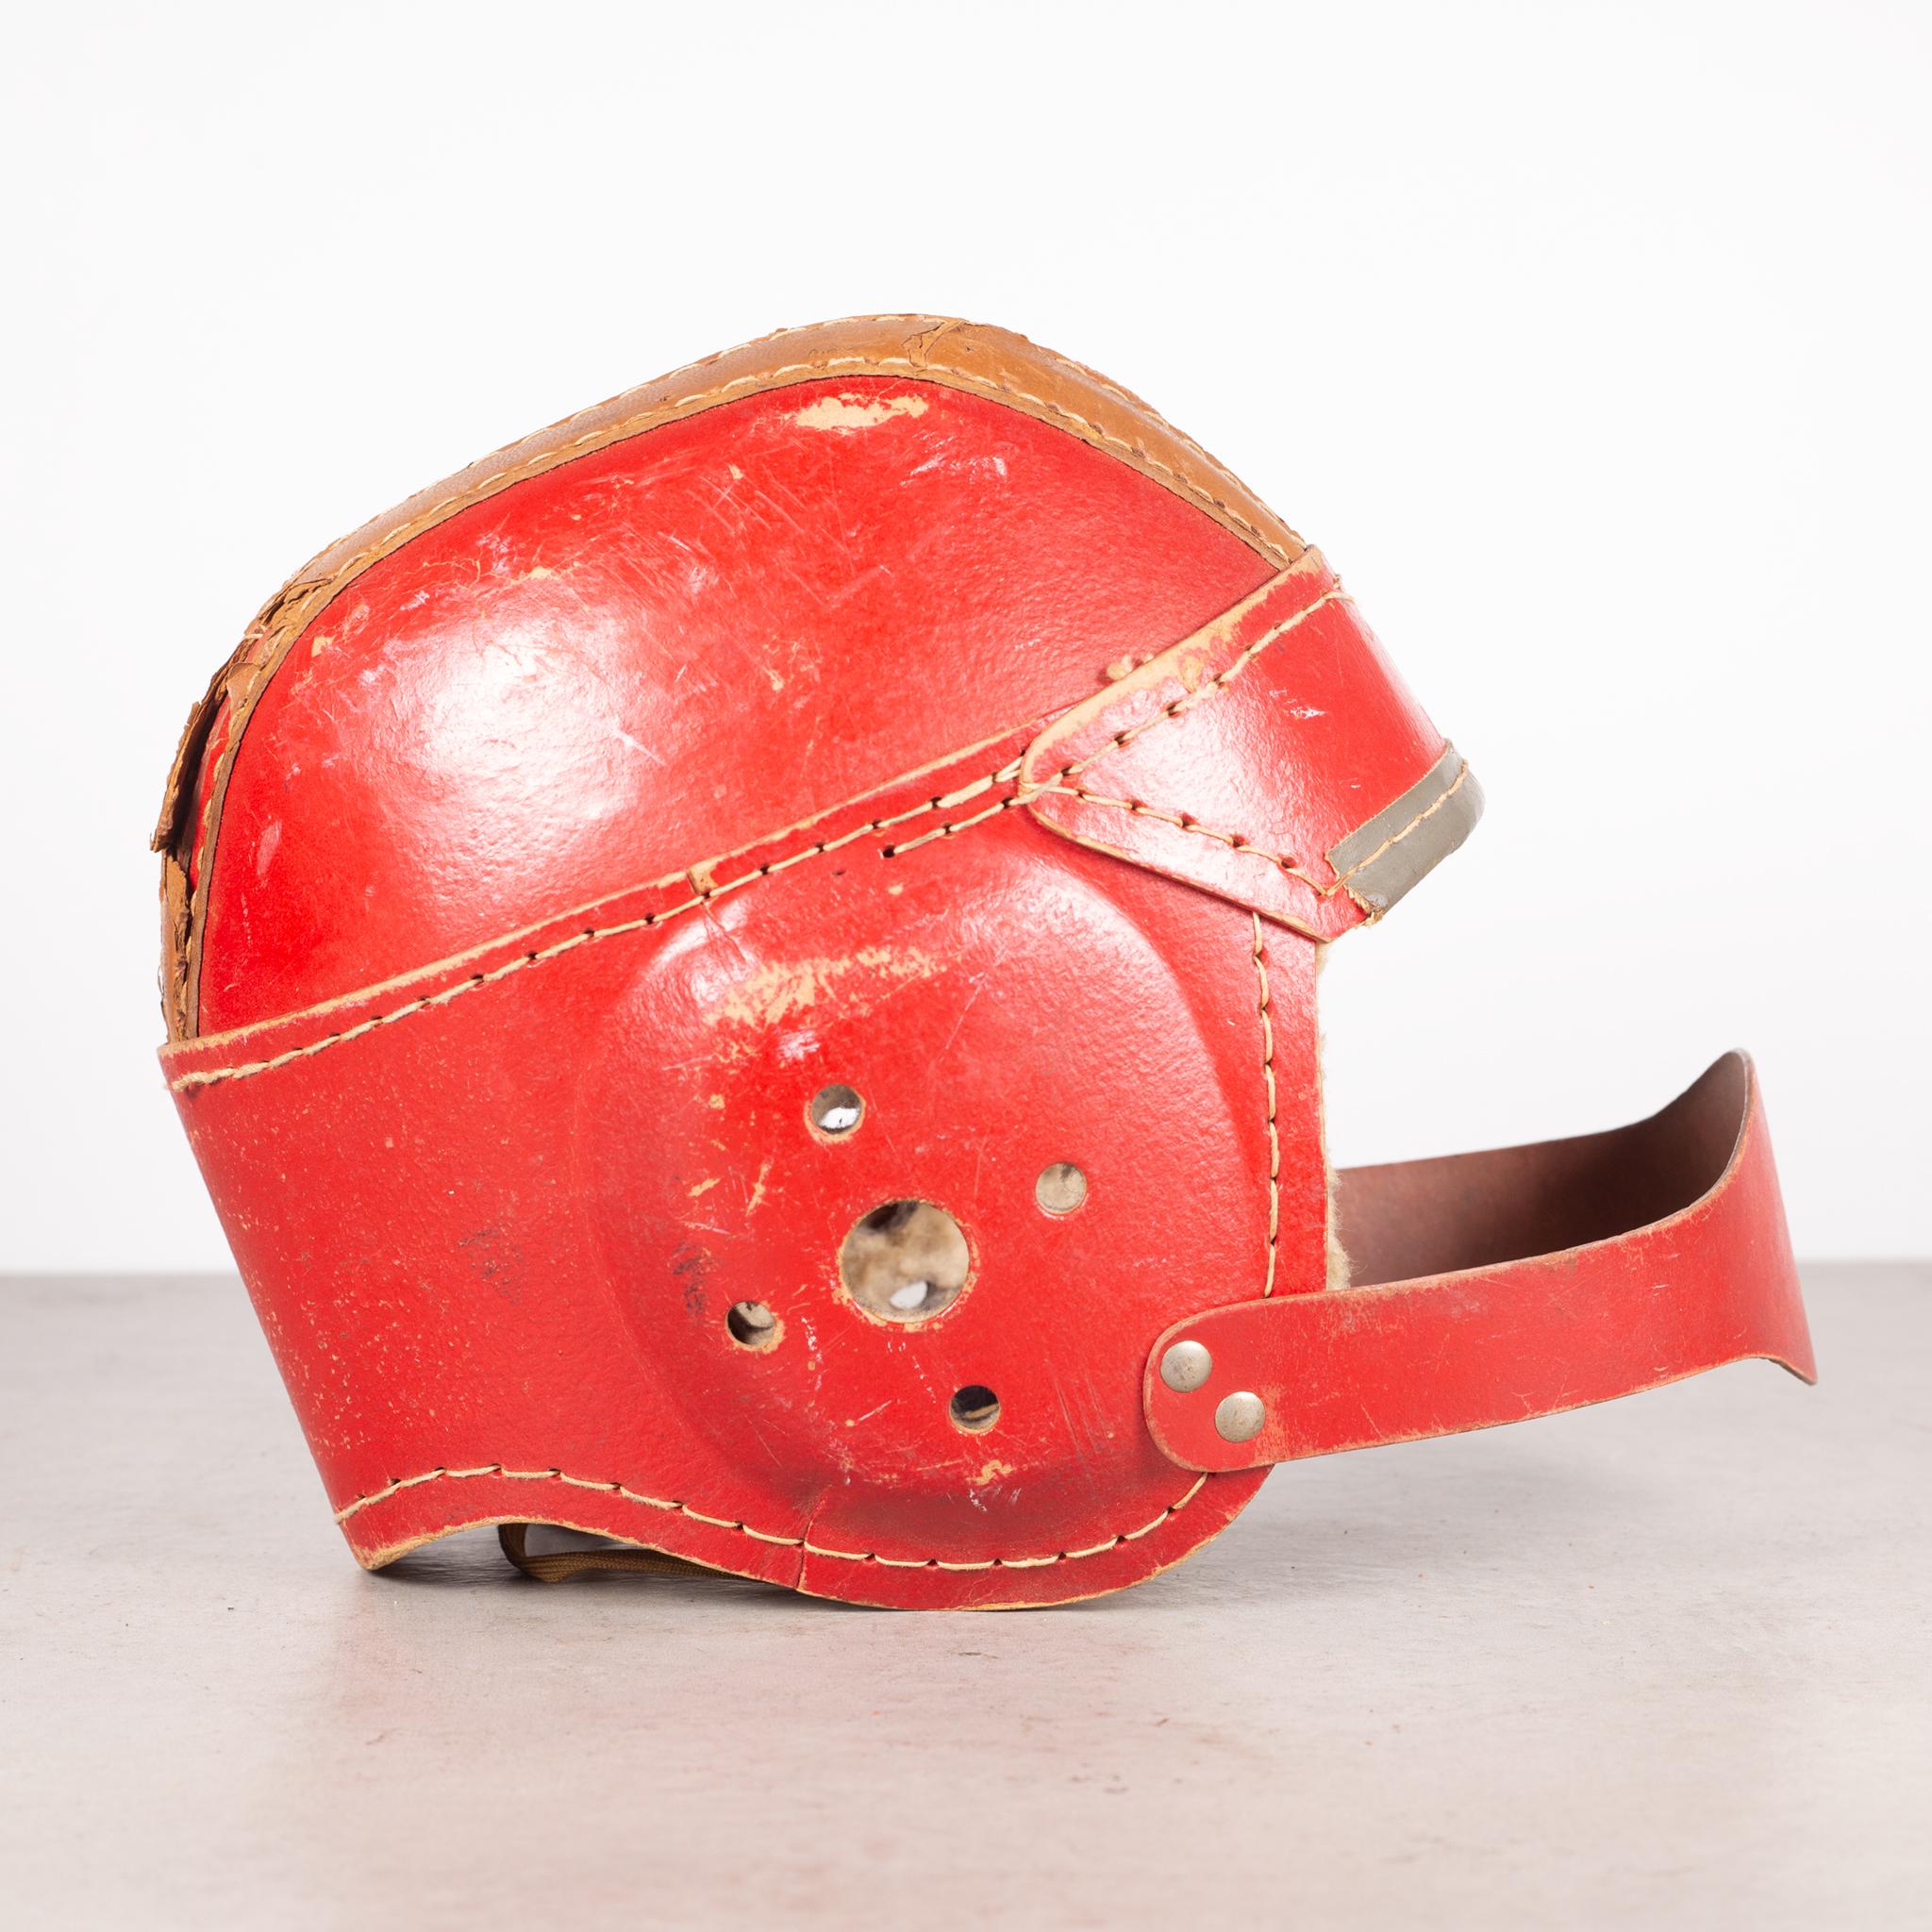 1930-1940s Four Strap Heisman Trophy Leather Football Helmet